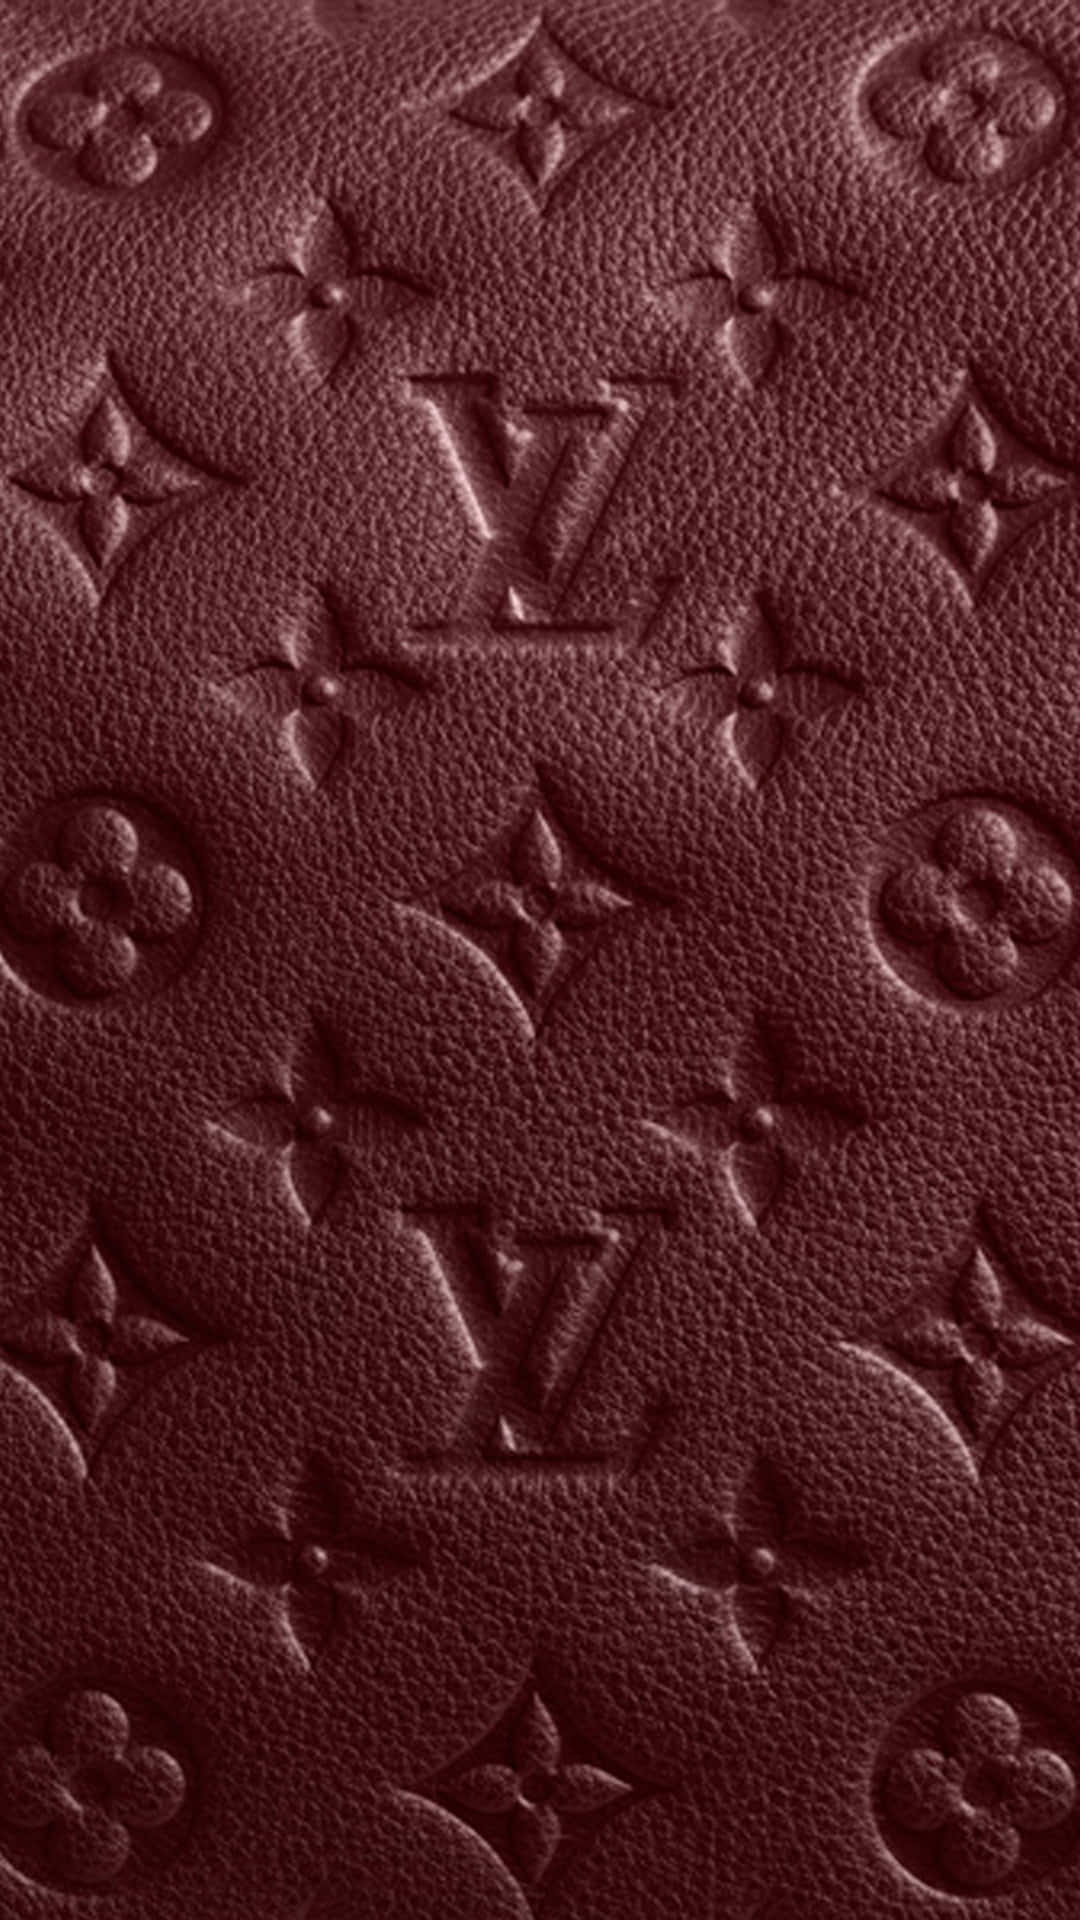 Wallpaper Louis Vuitton 4K